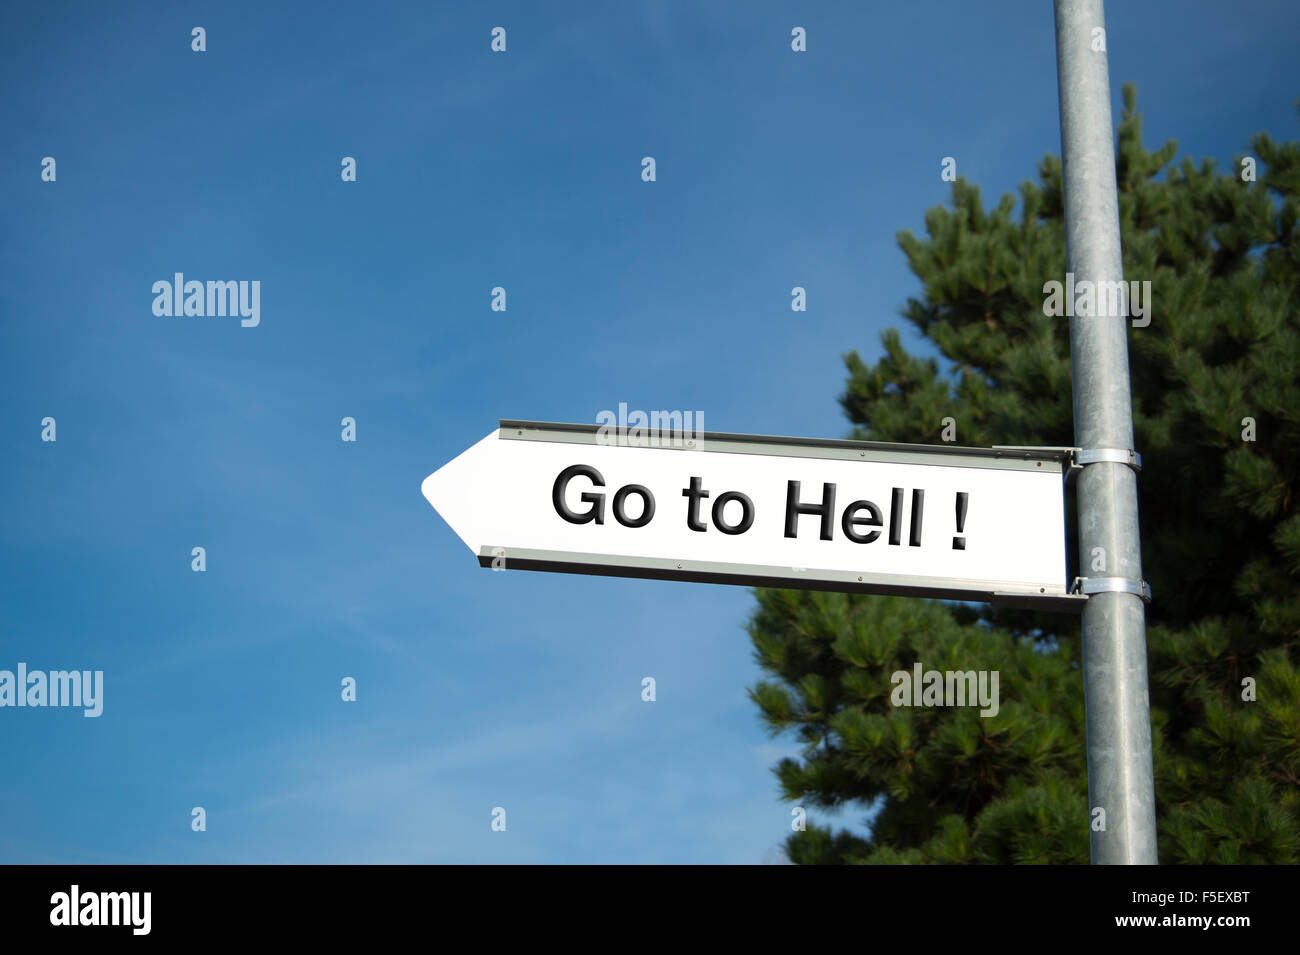 Wegweiser mit "Go to Hell!" Wegweiser. Stockfoto